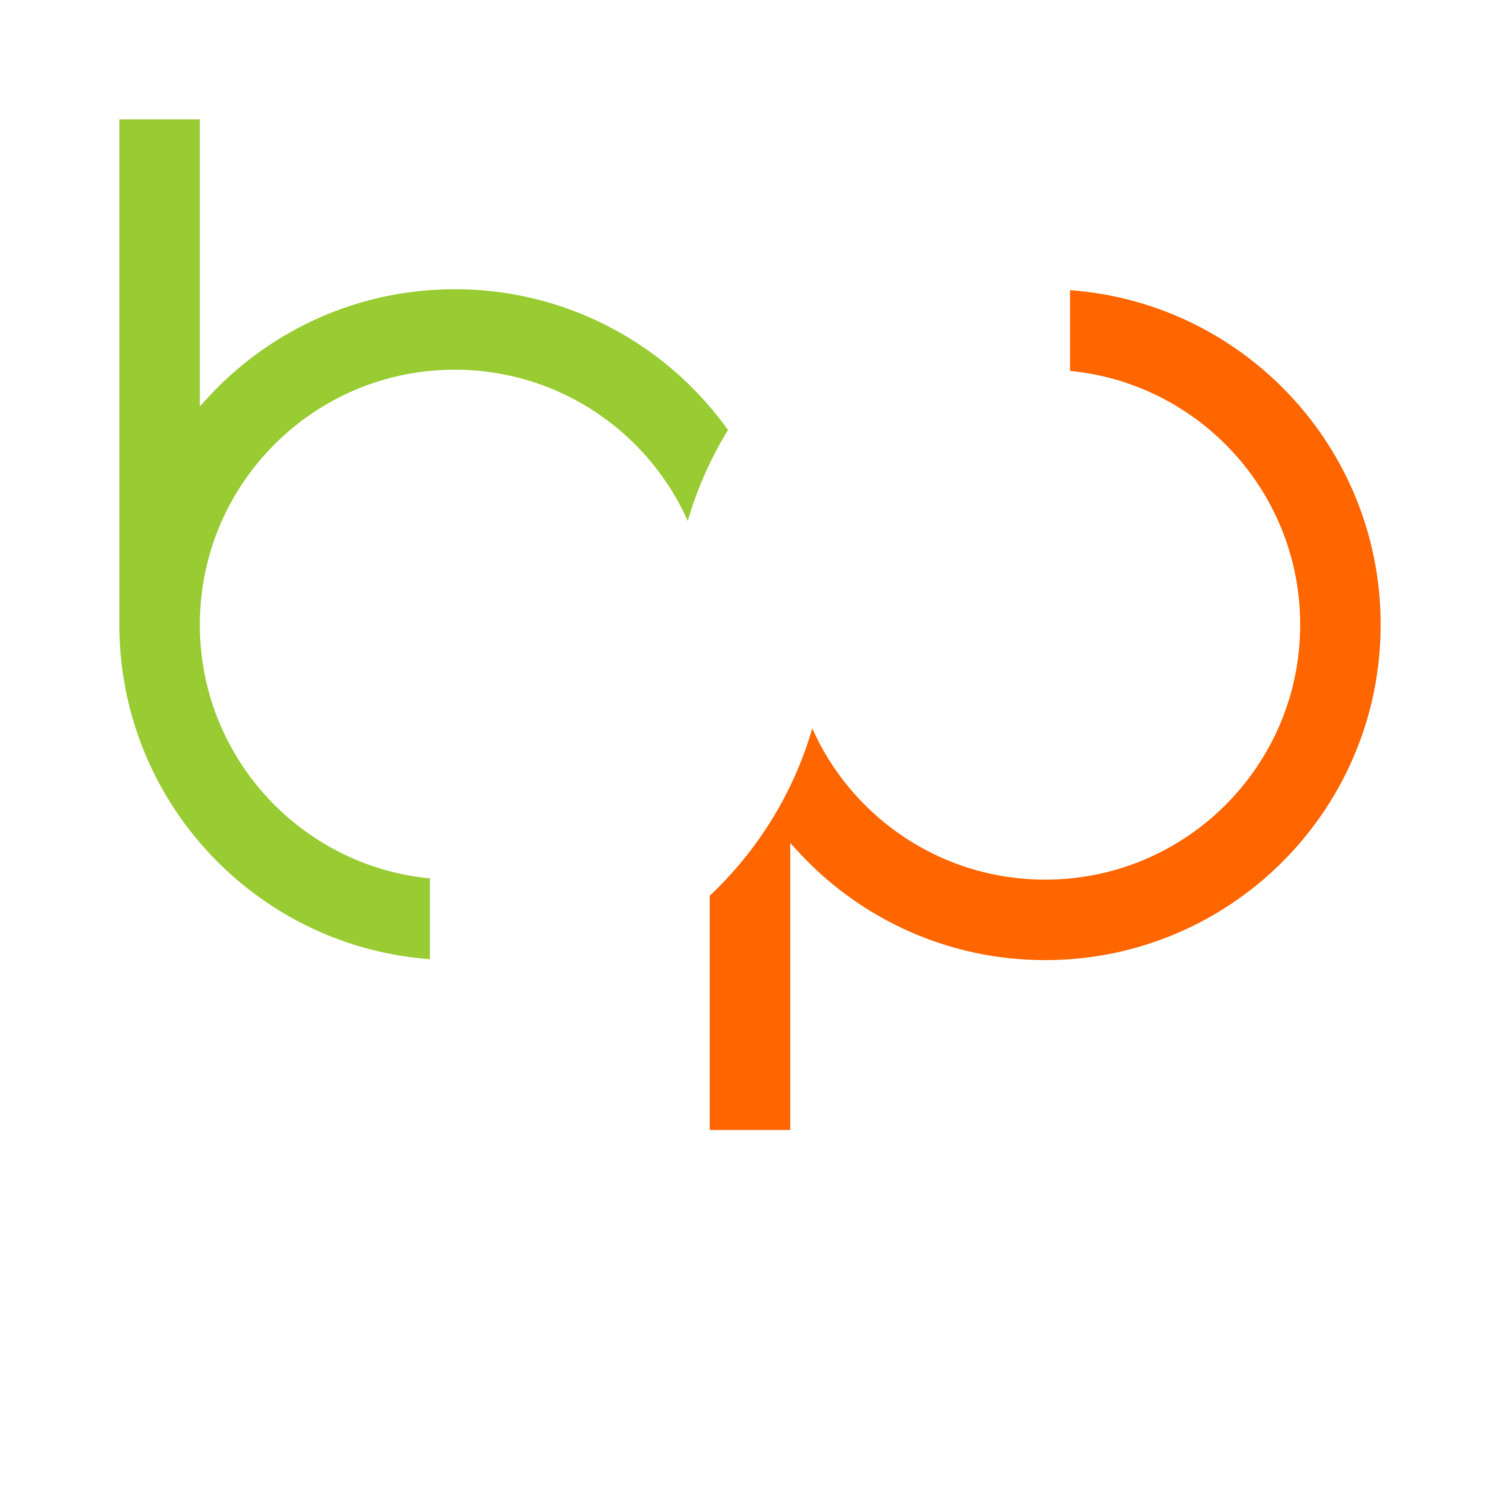 Best FloorPlans